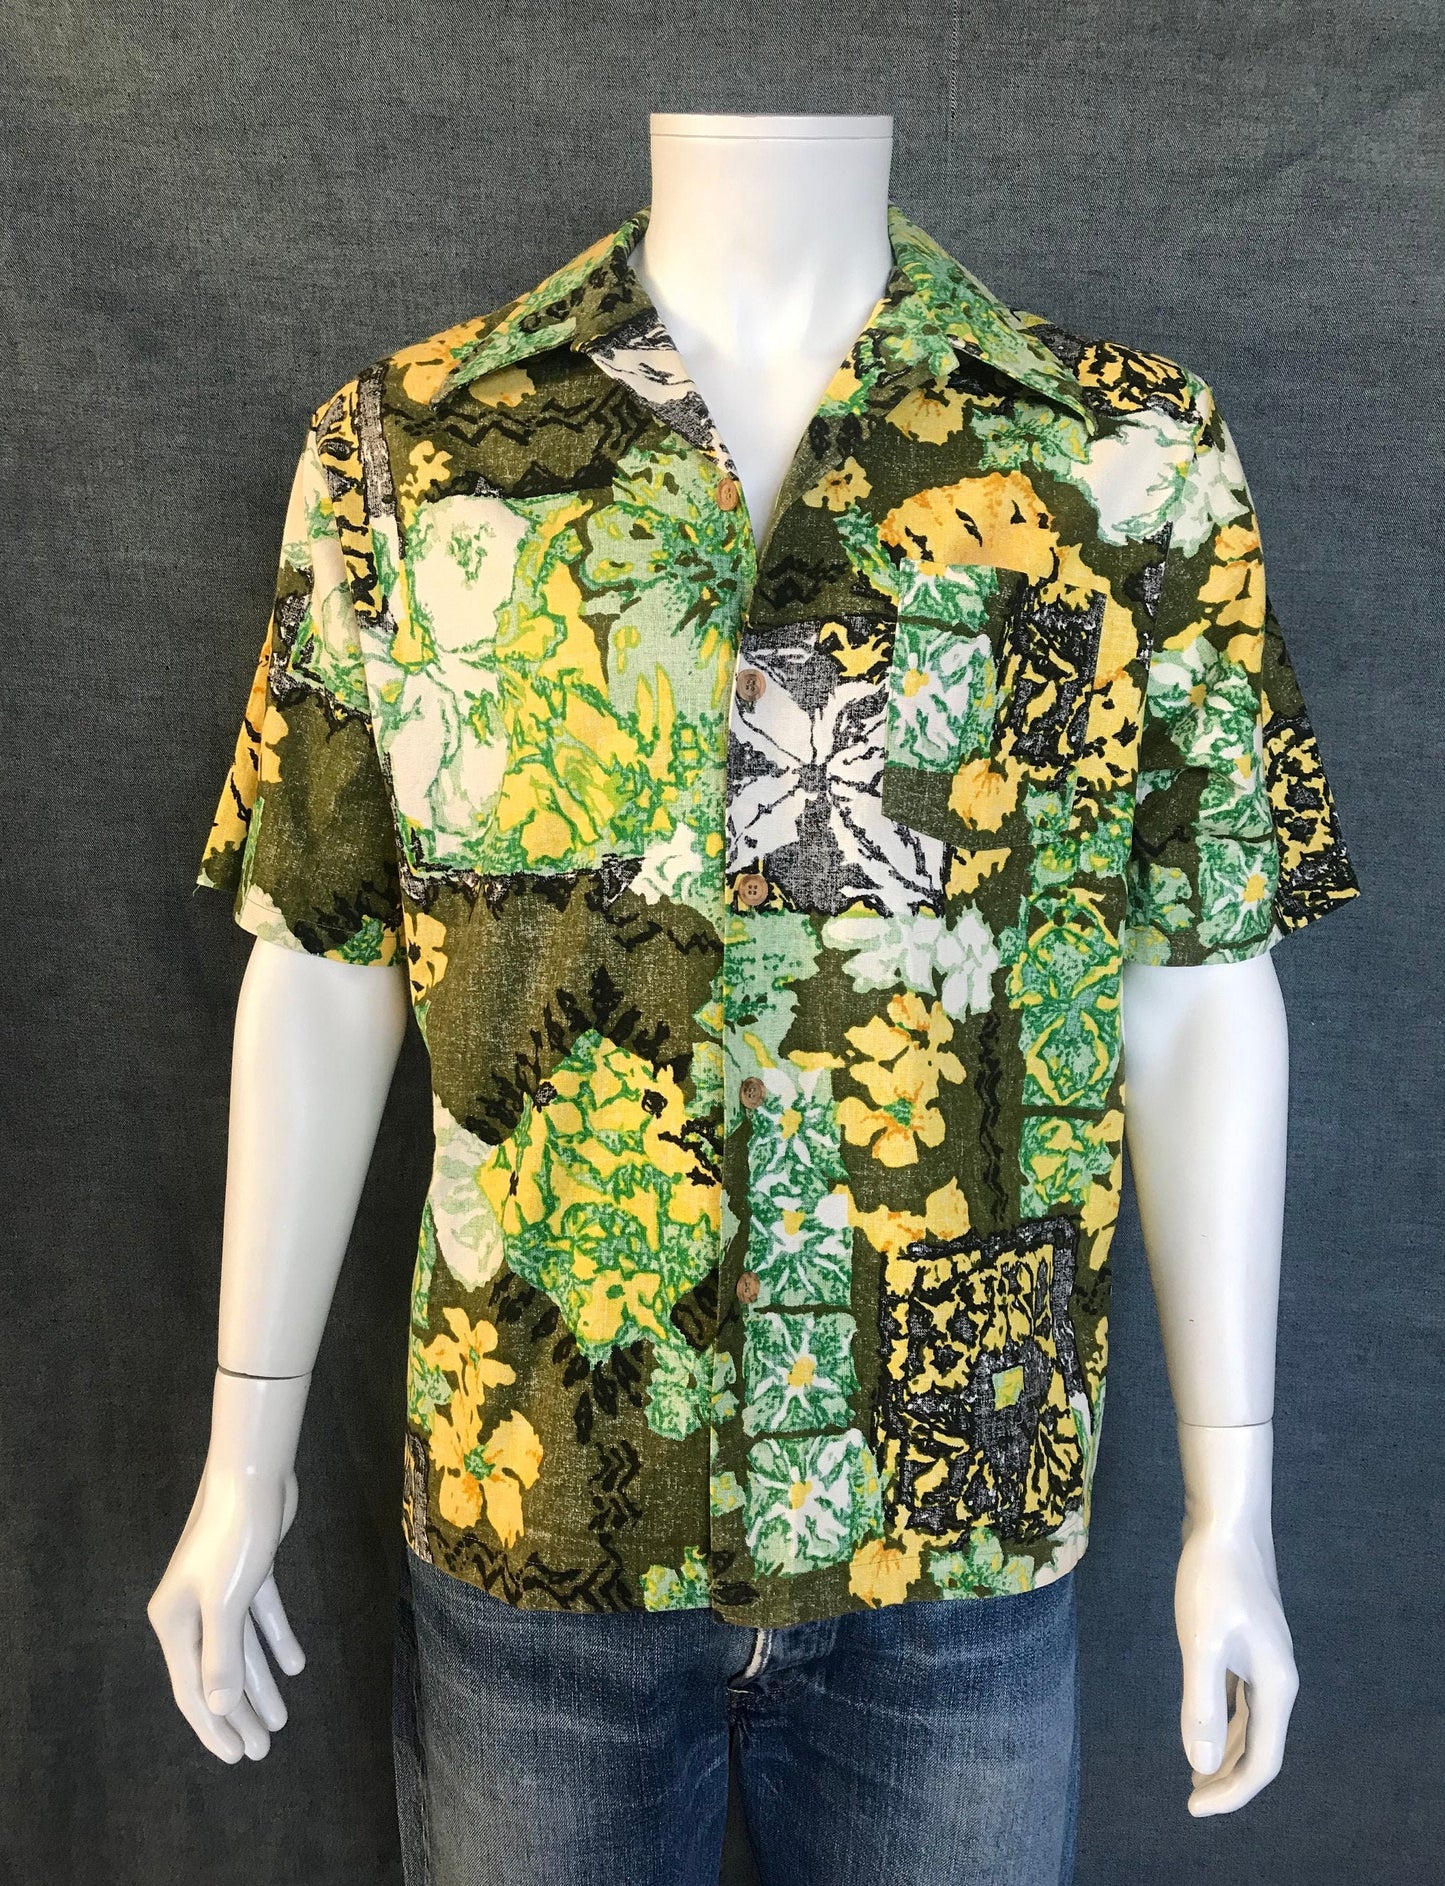 Size L Vintage 60s Hawaiian Cotton Shirt by Jantzen | Retro Aloha Style